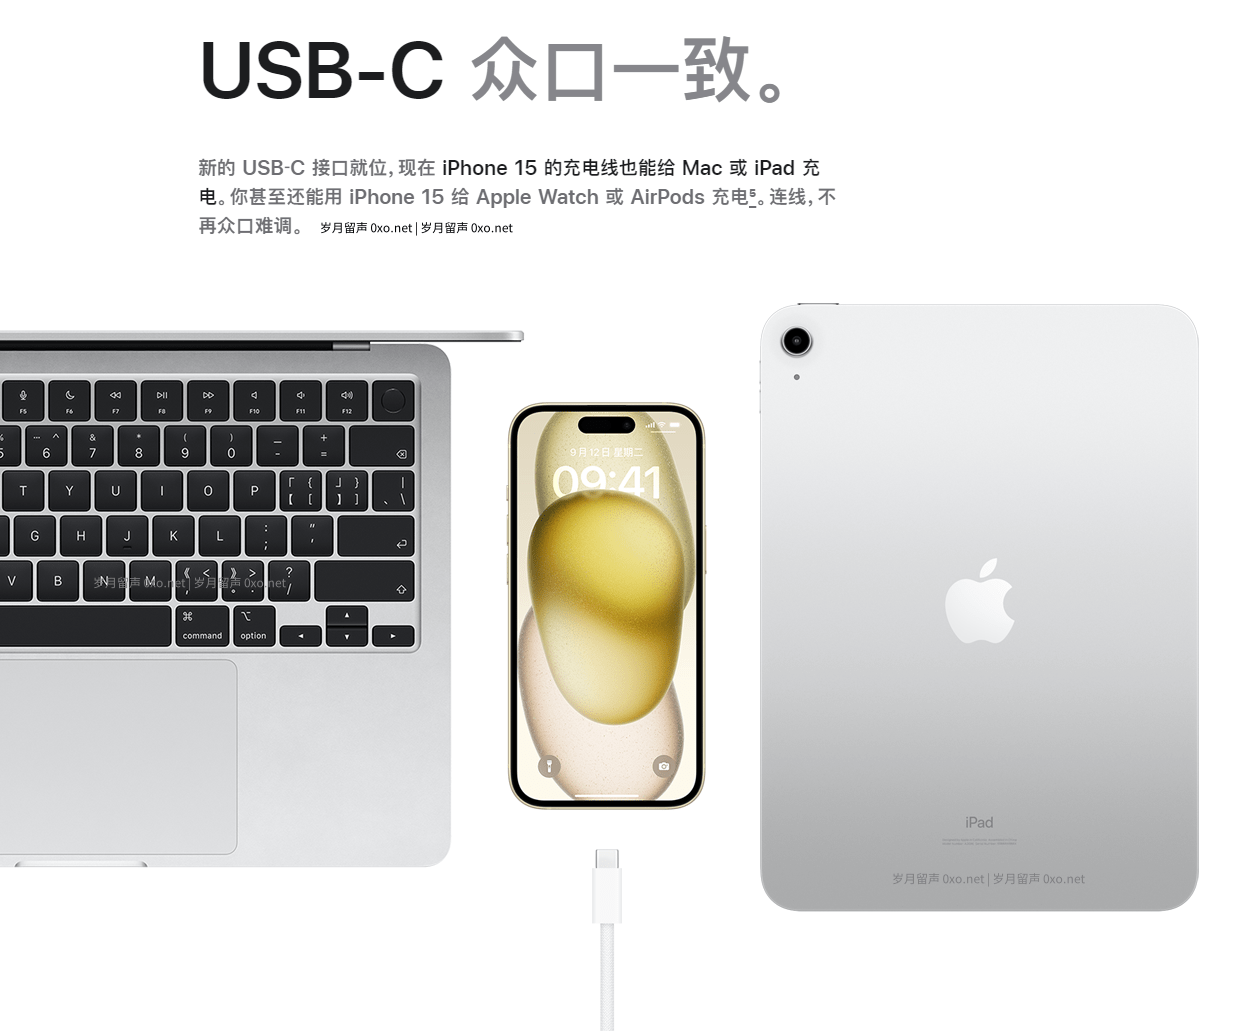 iPhone 15系列USB-C接口并未限制MFI认证数据线 - 第1张图片